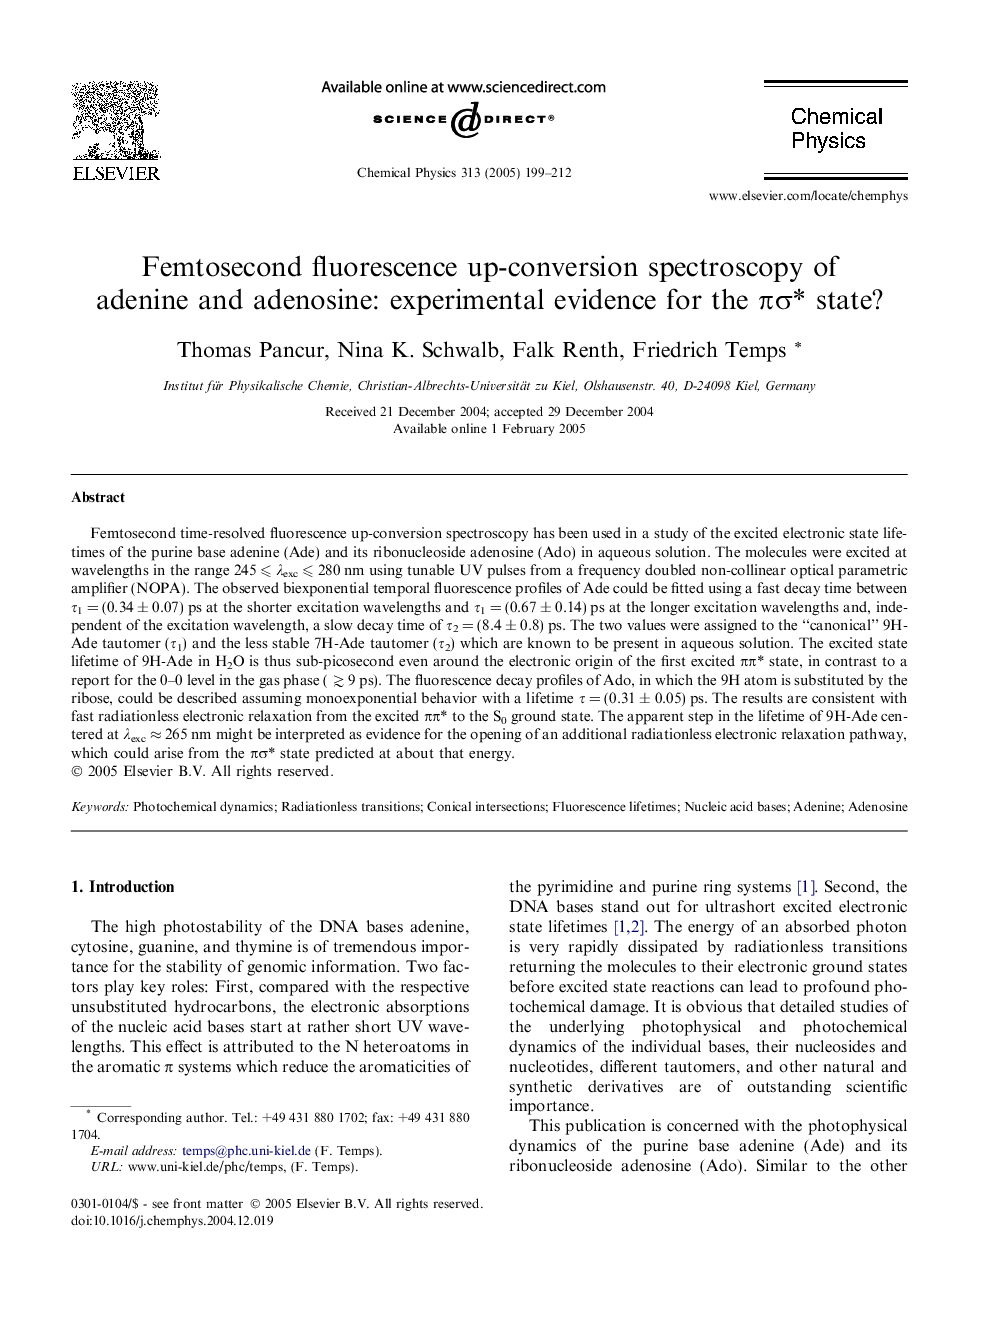 Femtosecond fluorescence up-conversion spectroscopy of adenine and adenosine: experimental evidence for the ÏÏ* state?